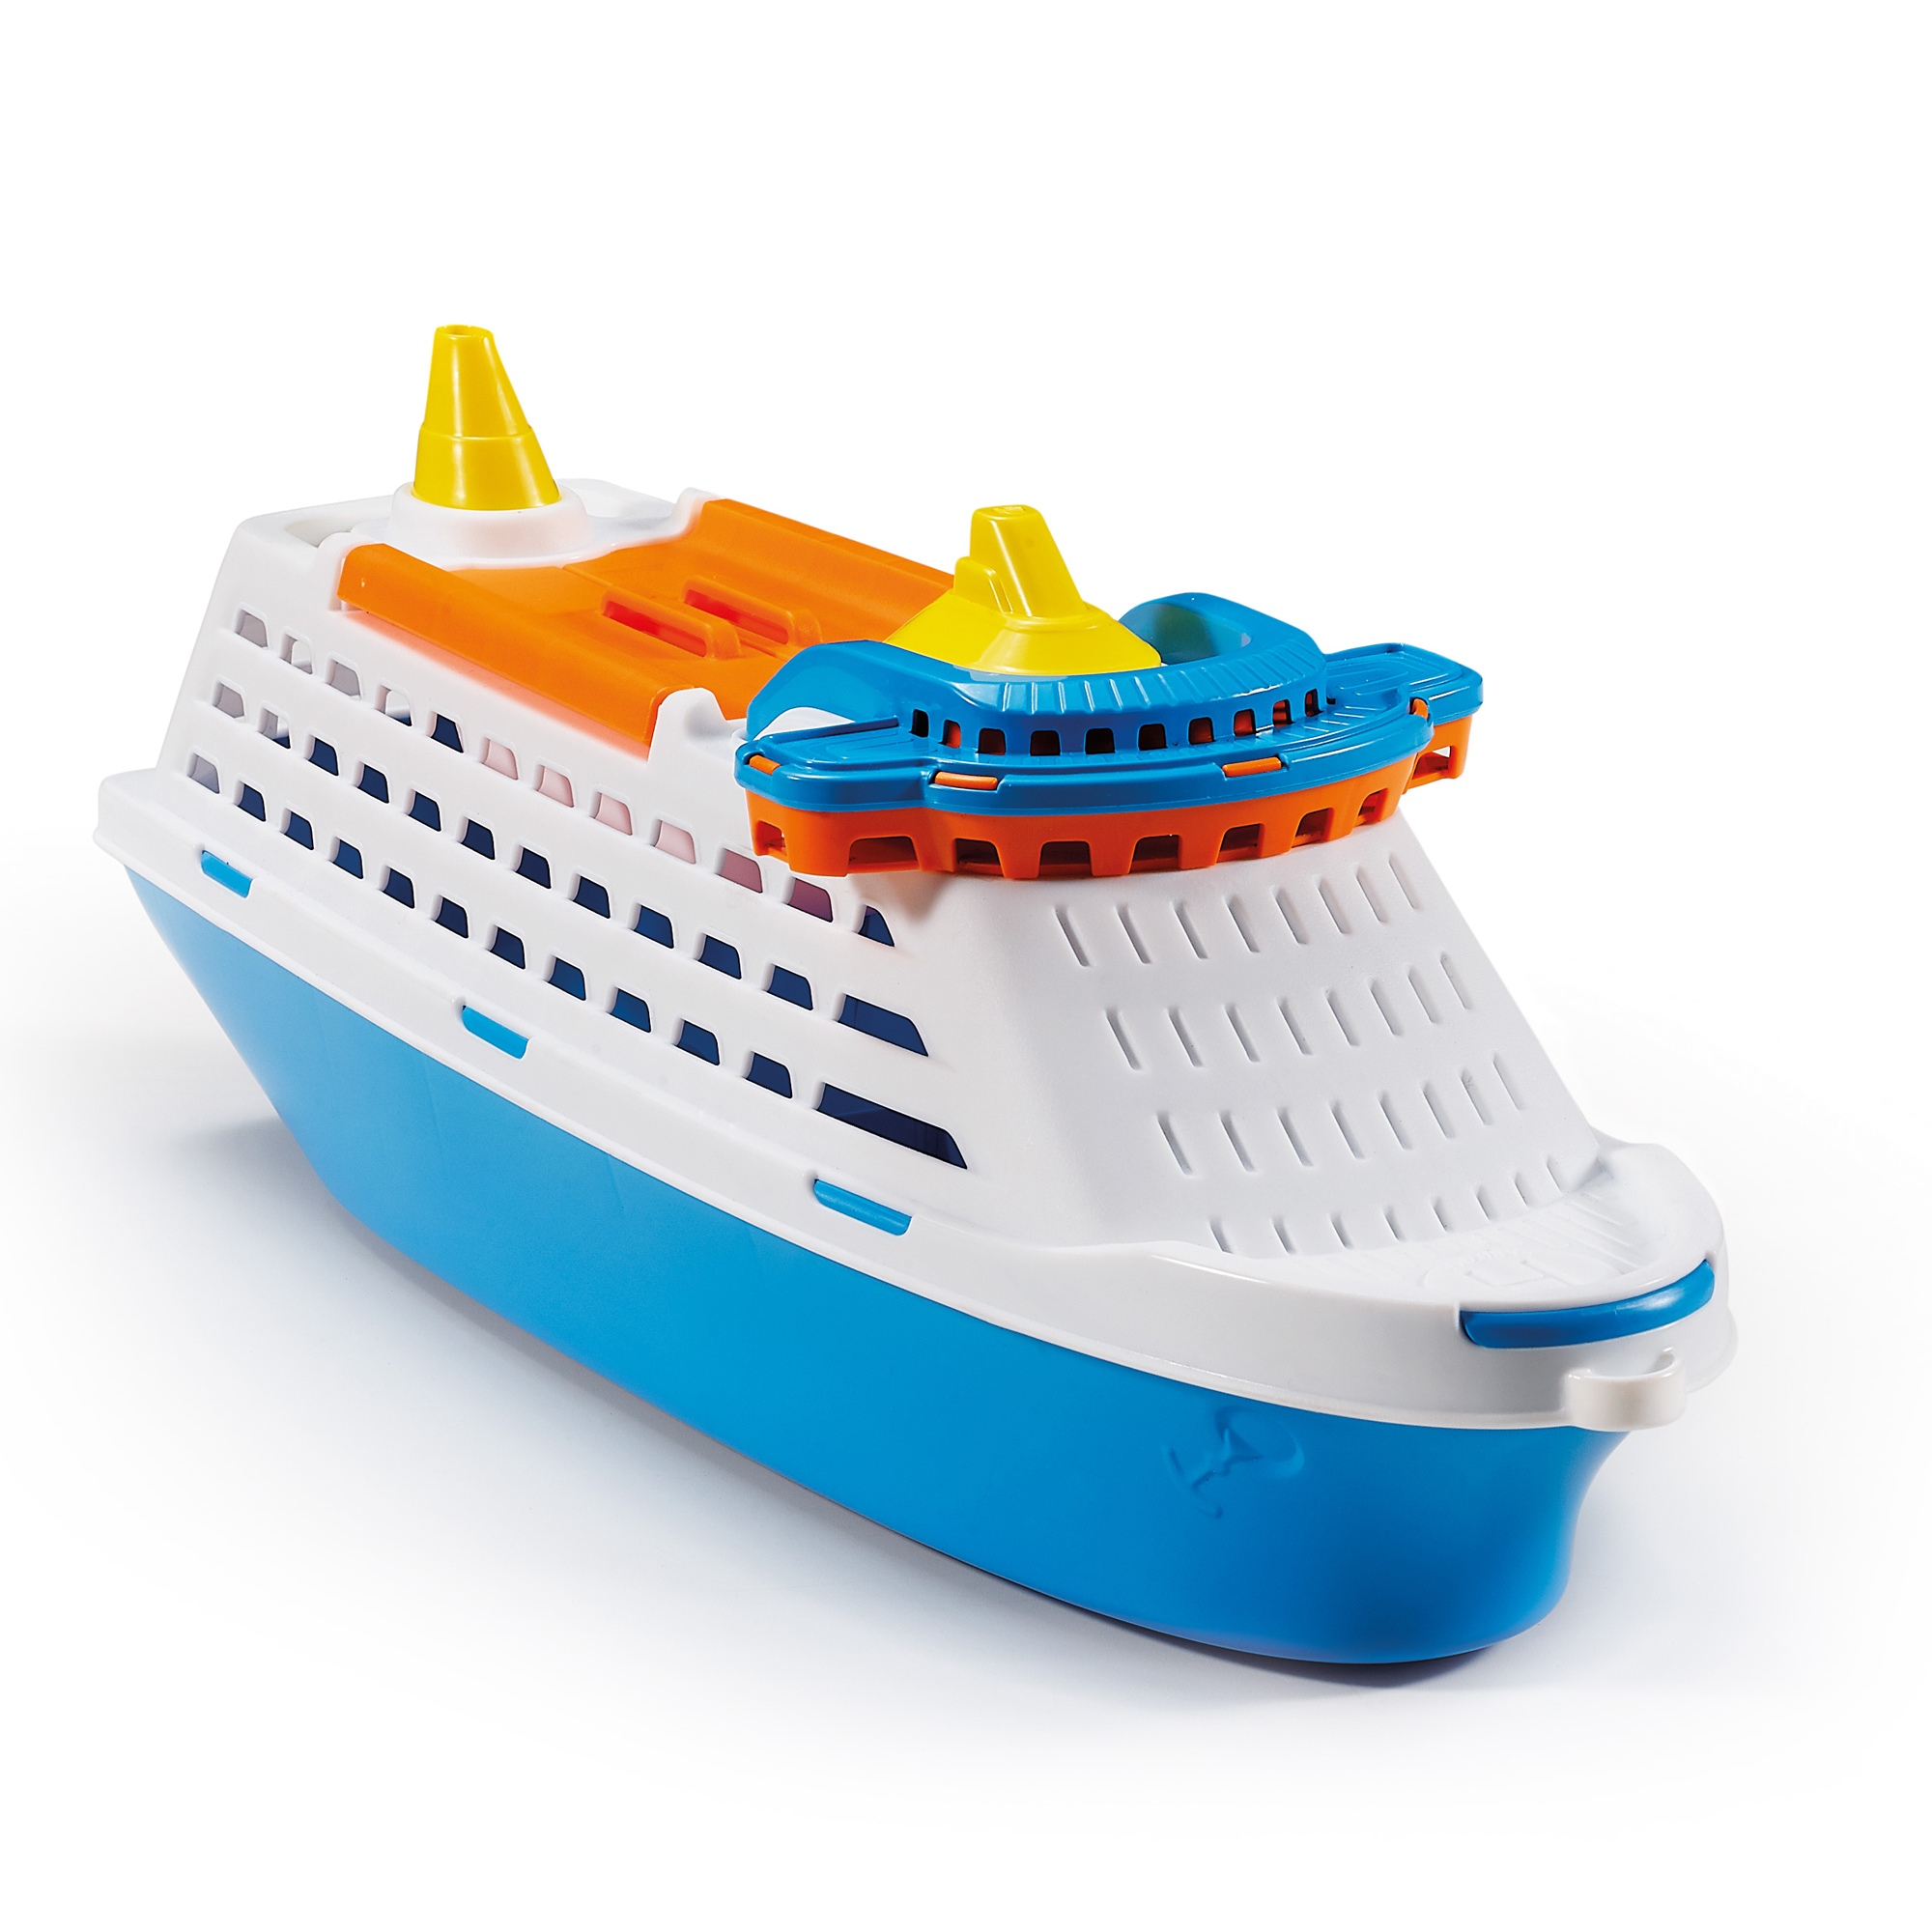 cruise ship toy